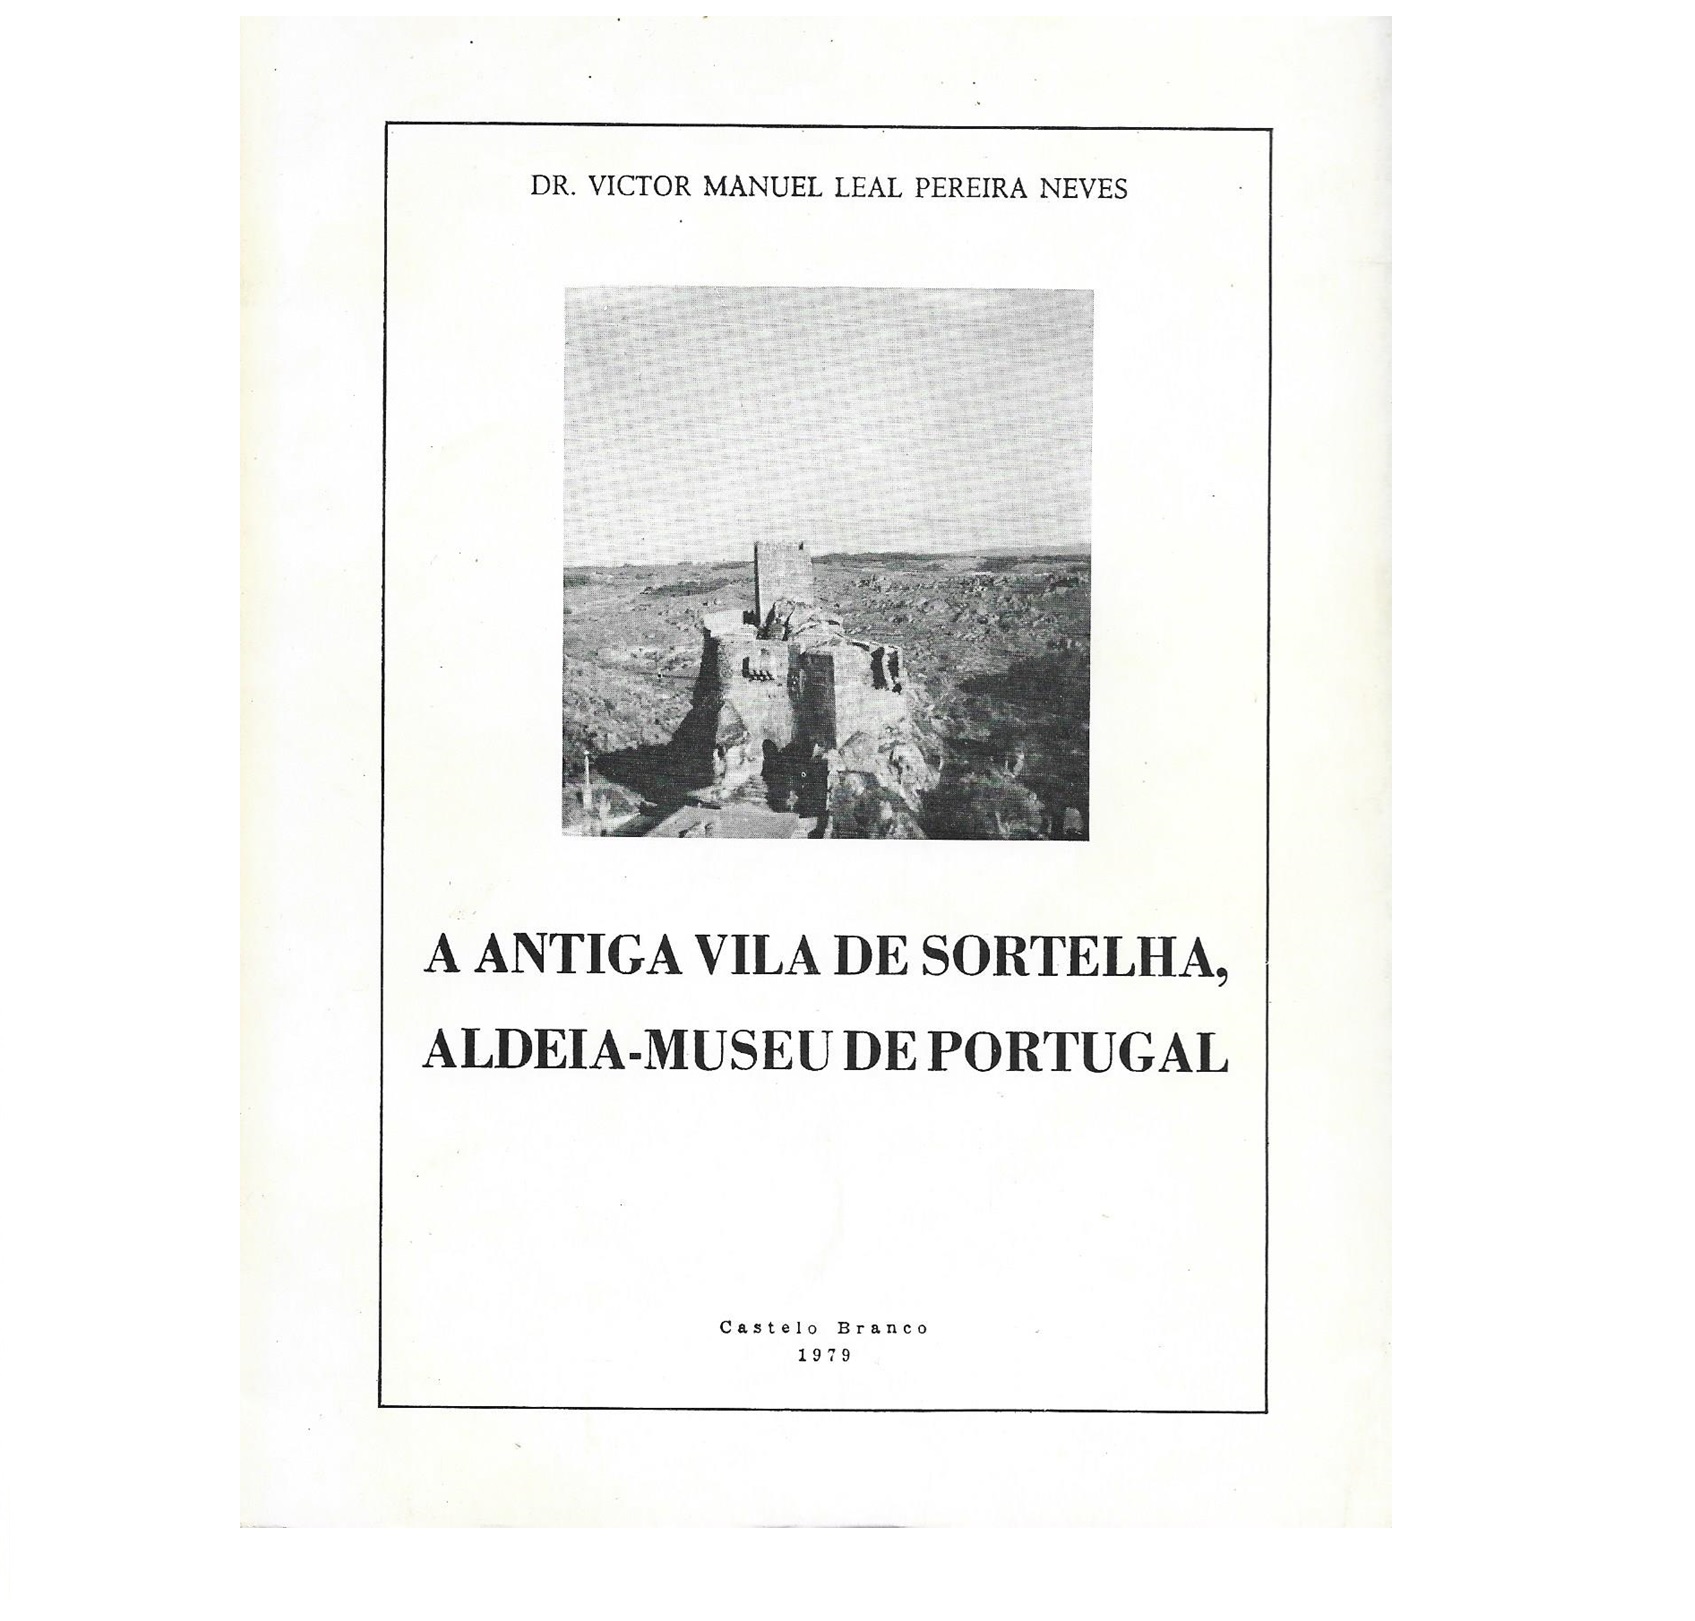 A ANTIGA VILA DE SORTELHA, ALDEIA-MUSEU DE PORTUGAL